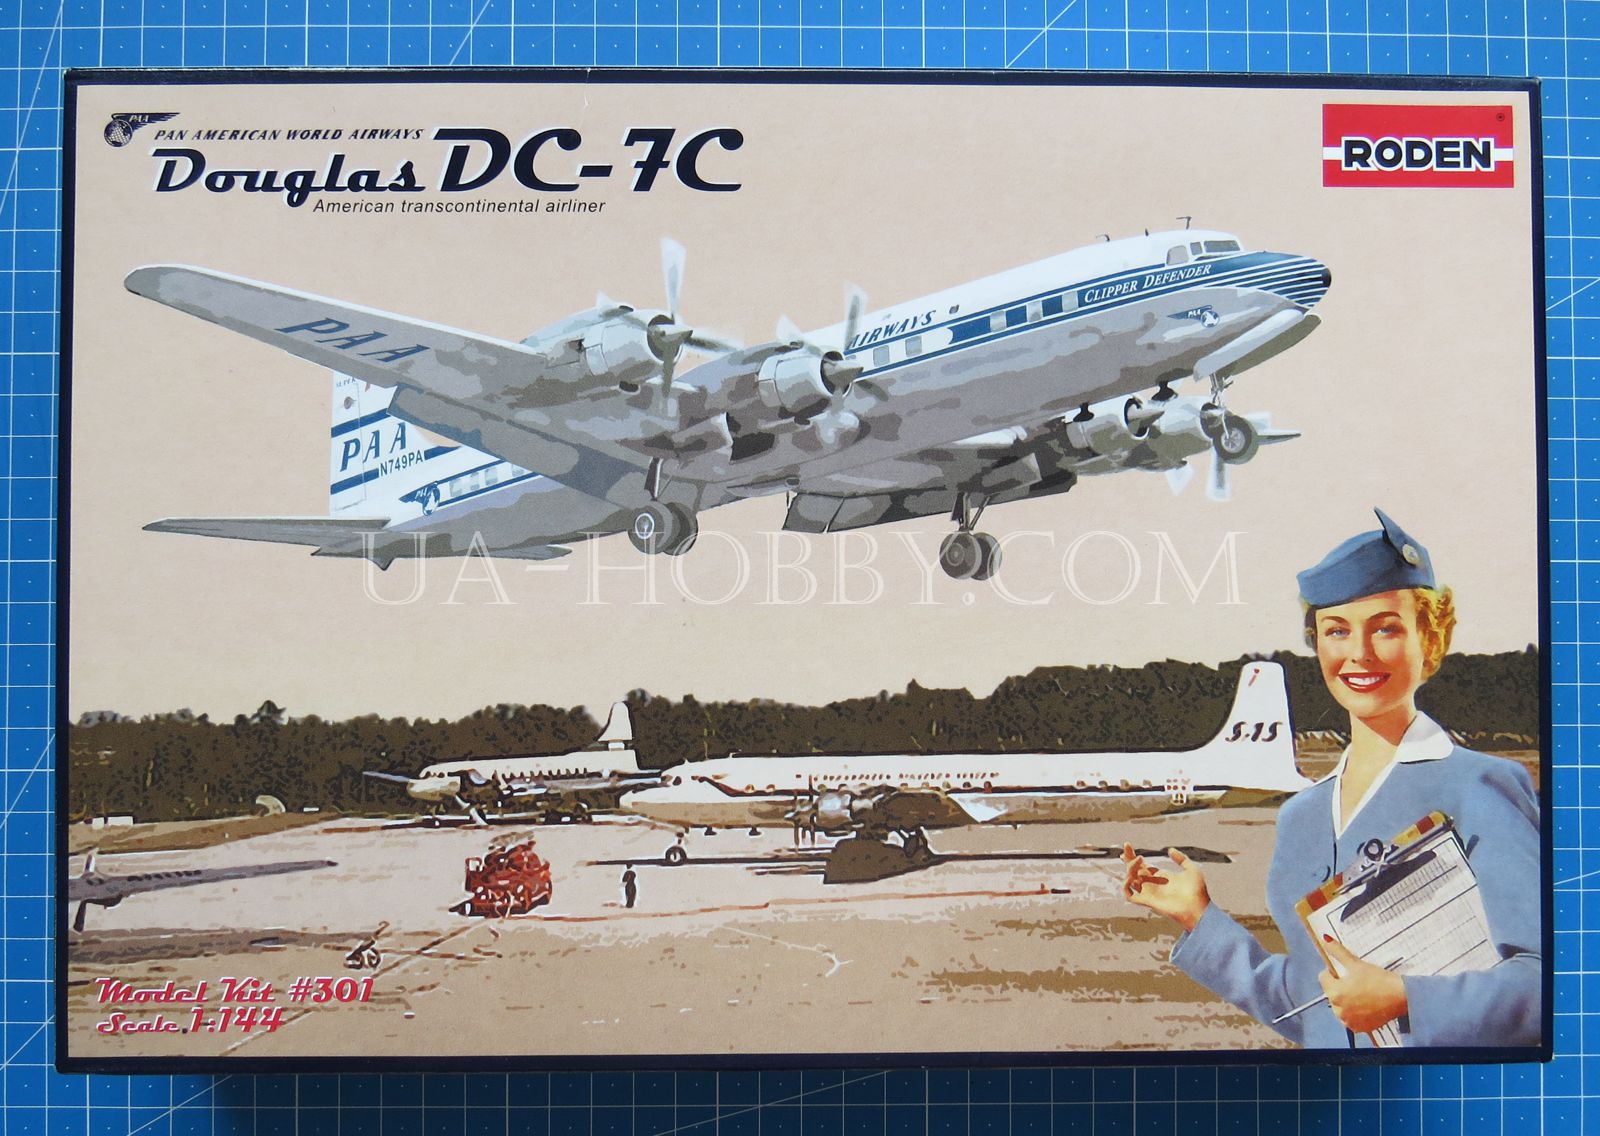 1/144 Douglas DC-7C Pan American World Airways. Roden 301